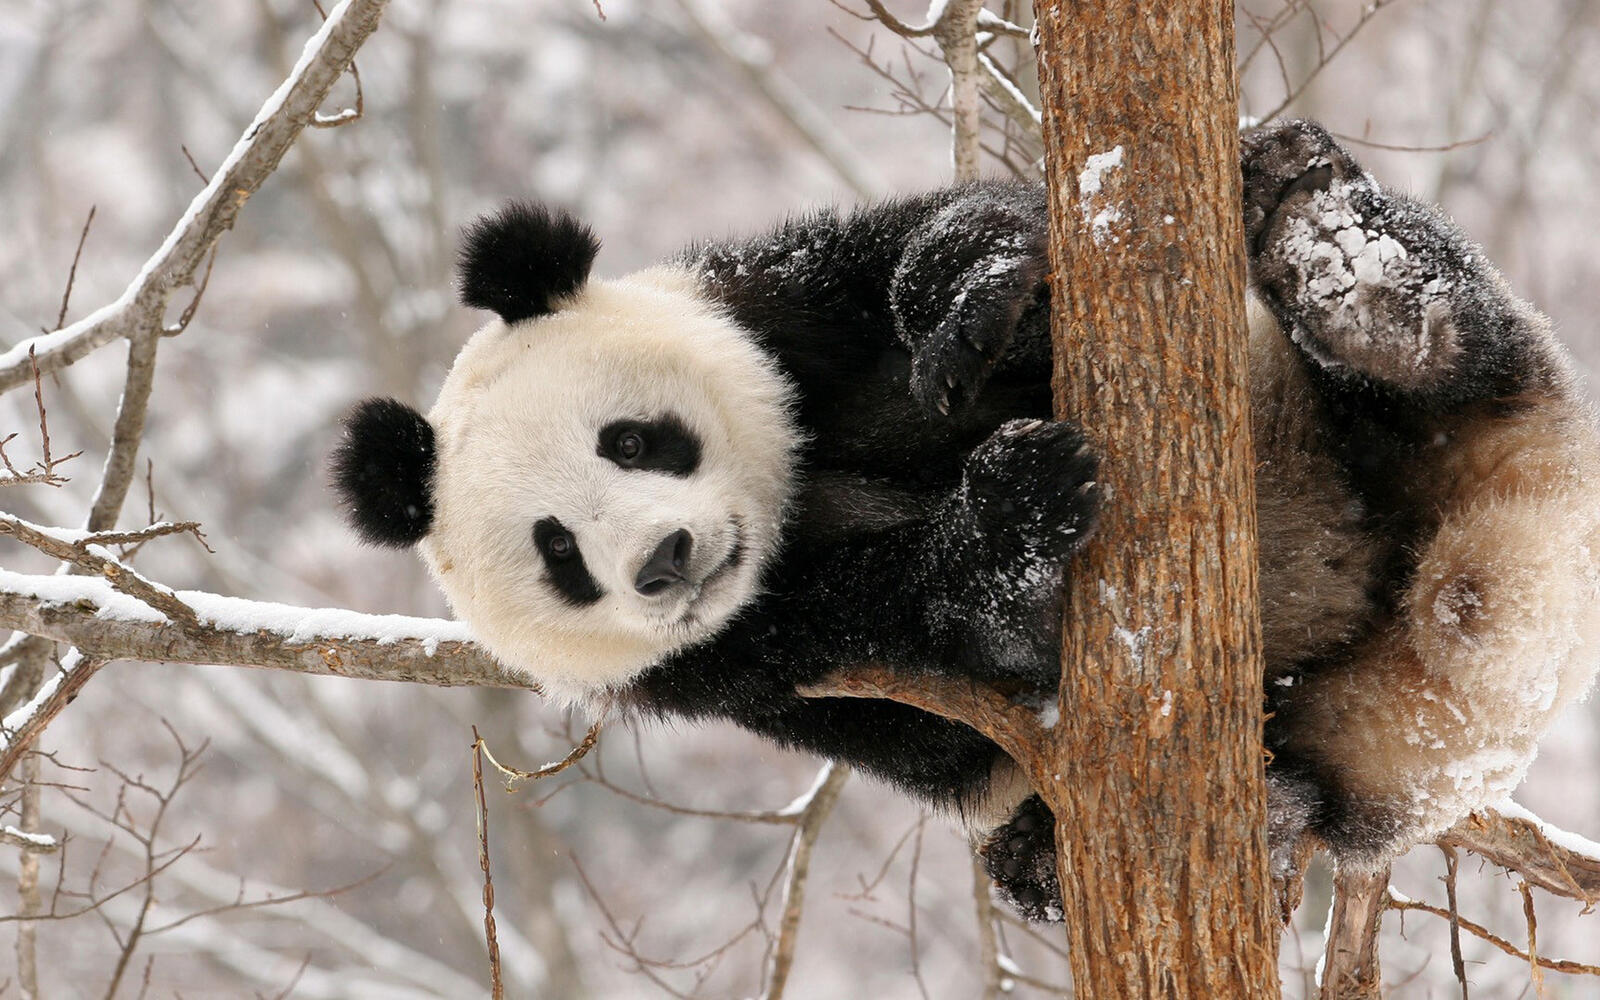 Wallpapers panda bamboo bear tree on the desktop